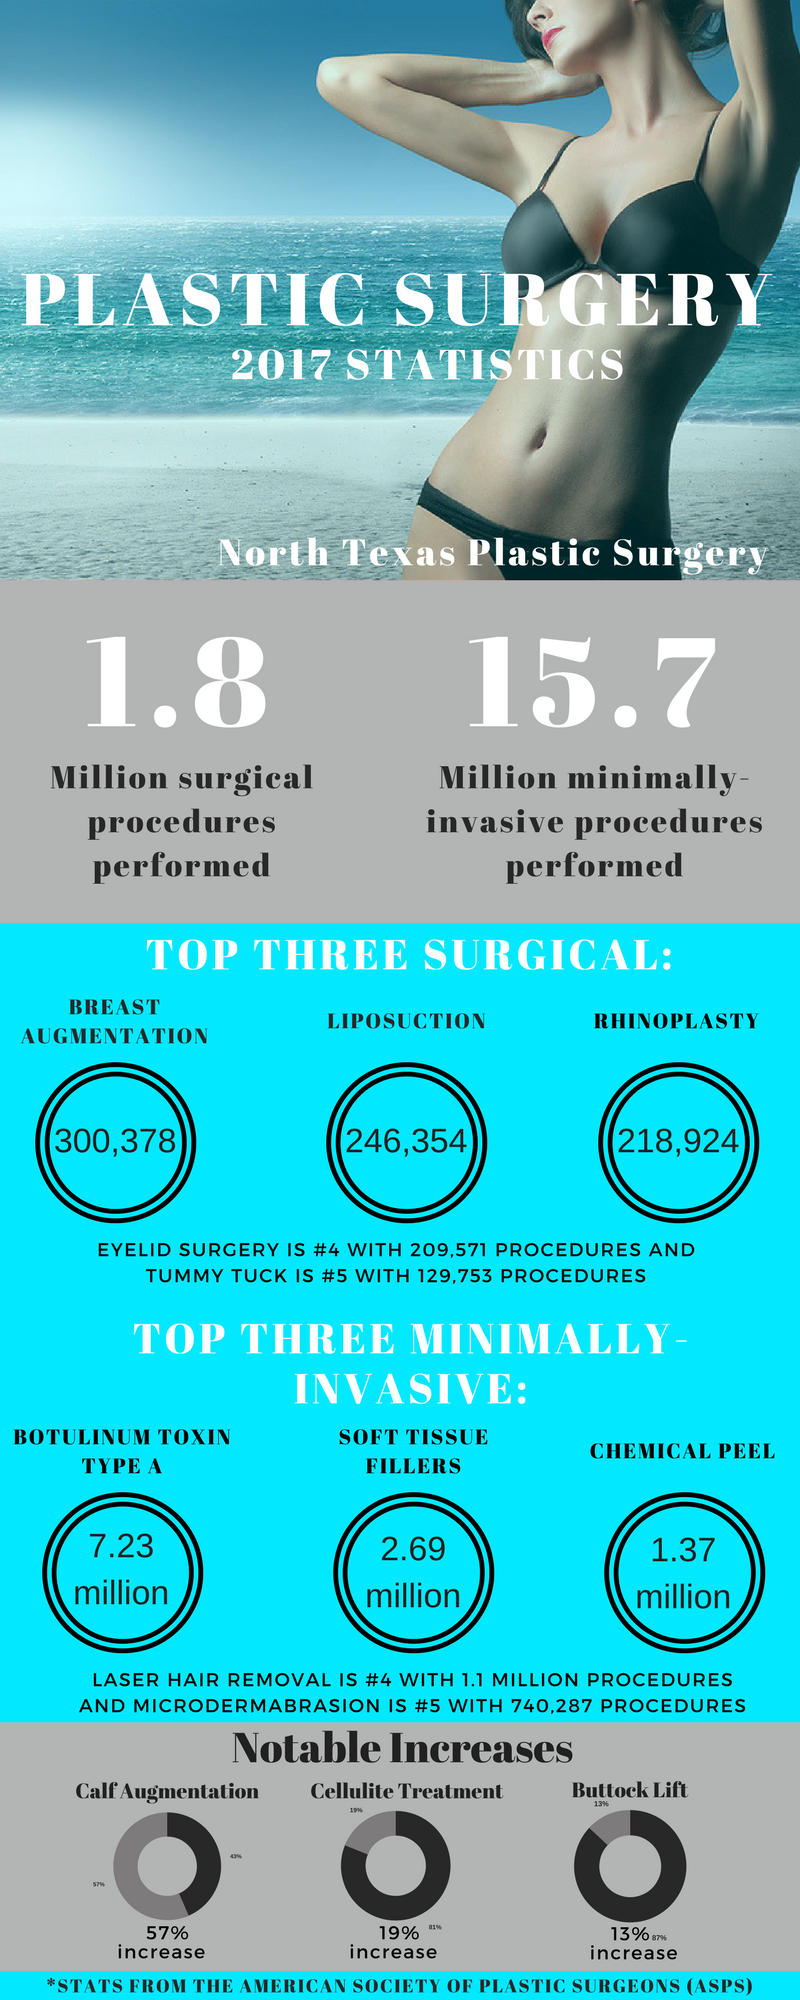 2017 plastic surgery stats dallas plano southlake texas